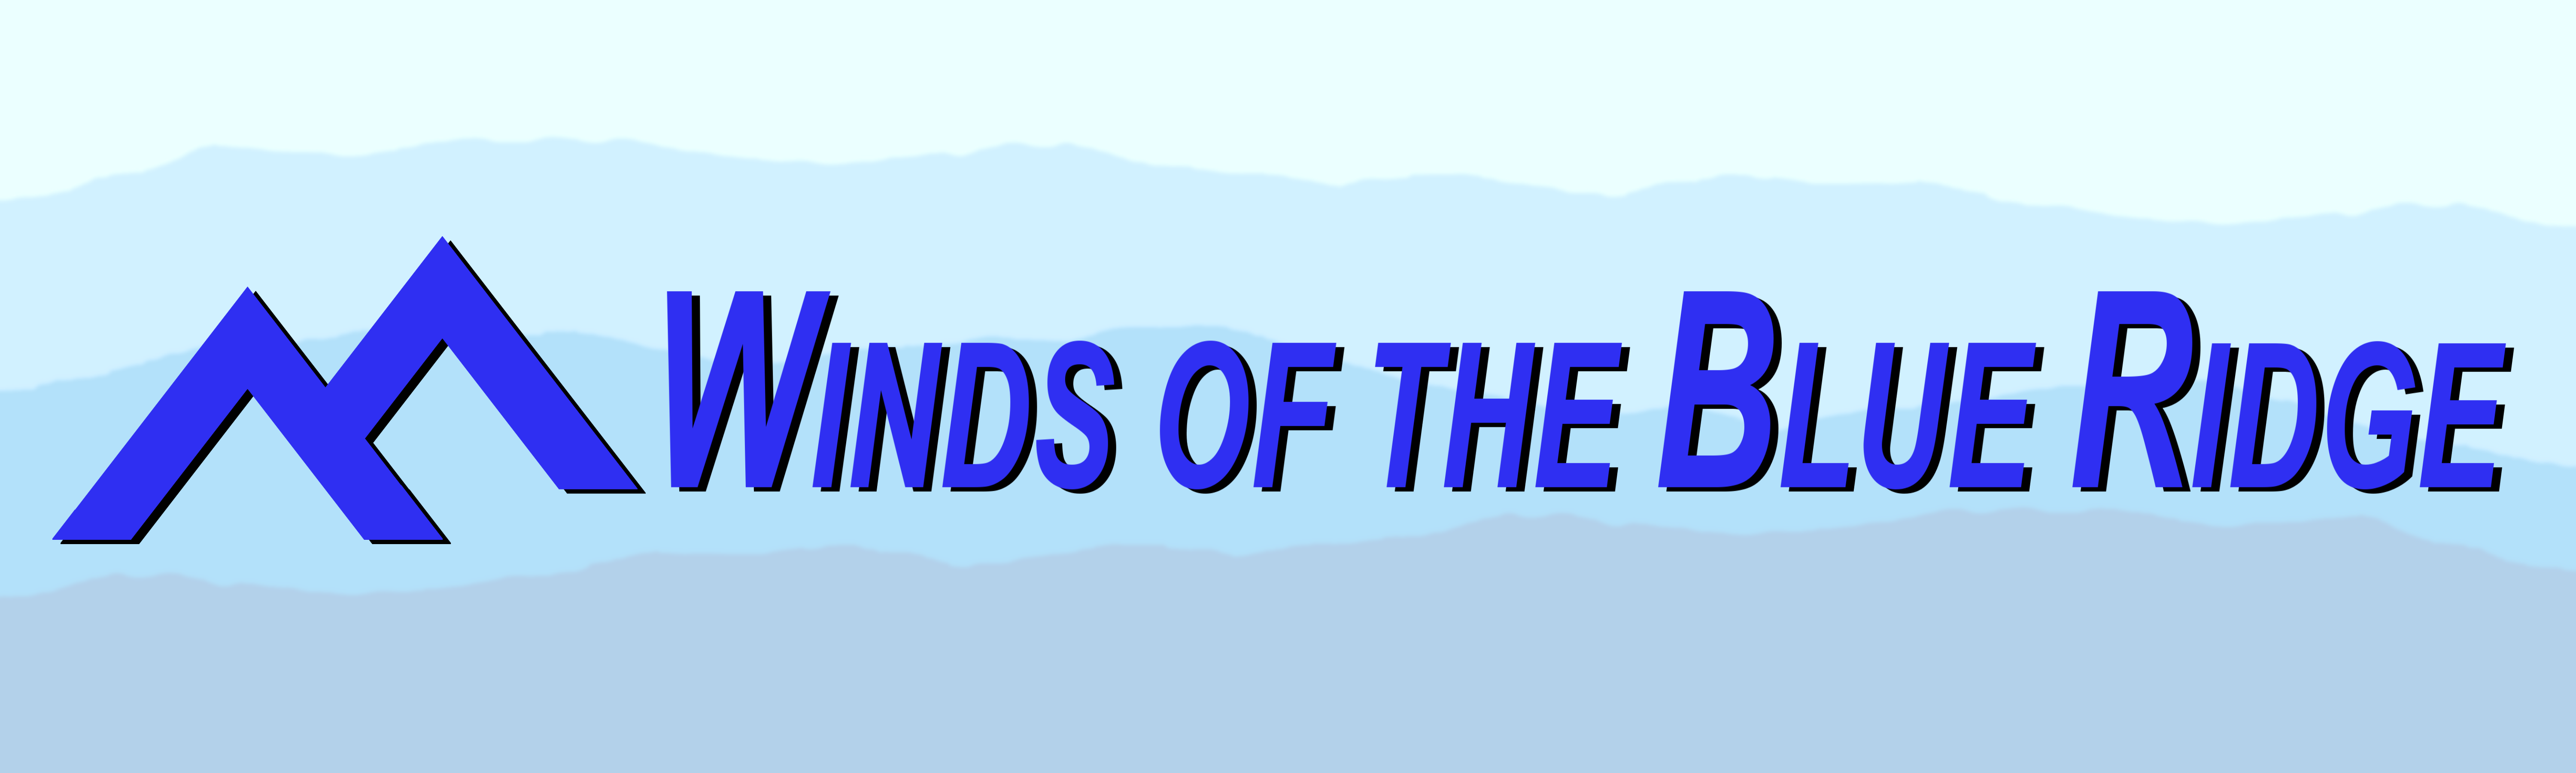 Winds of the Blue Ridge logo